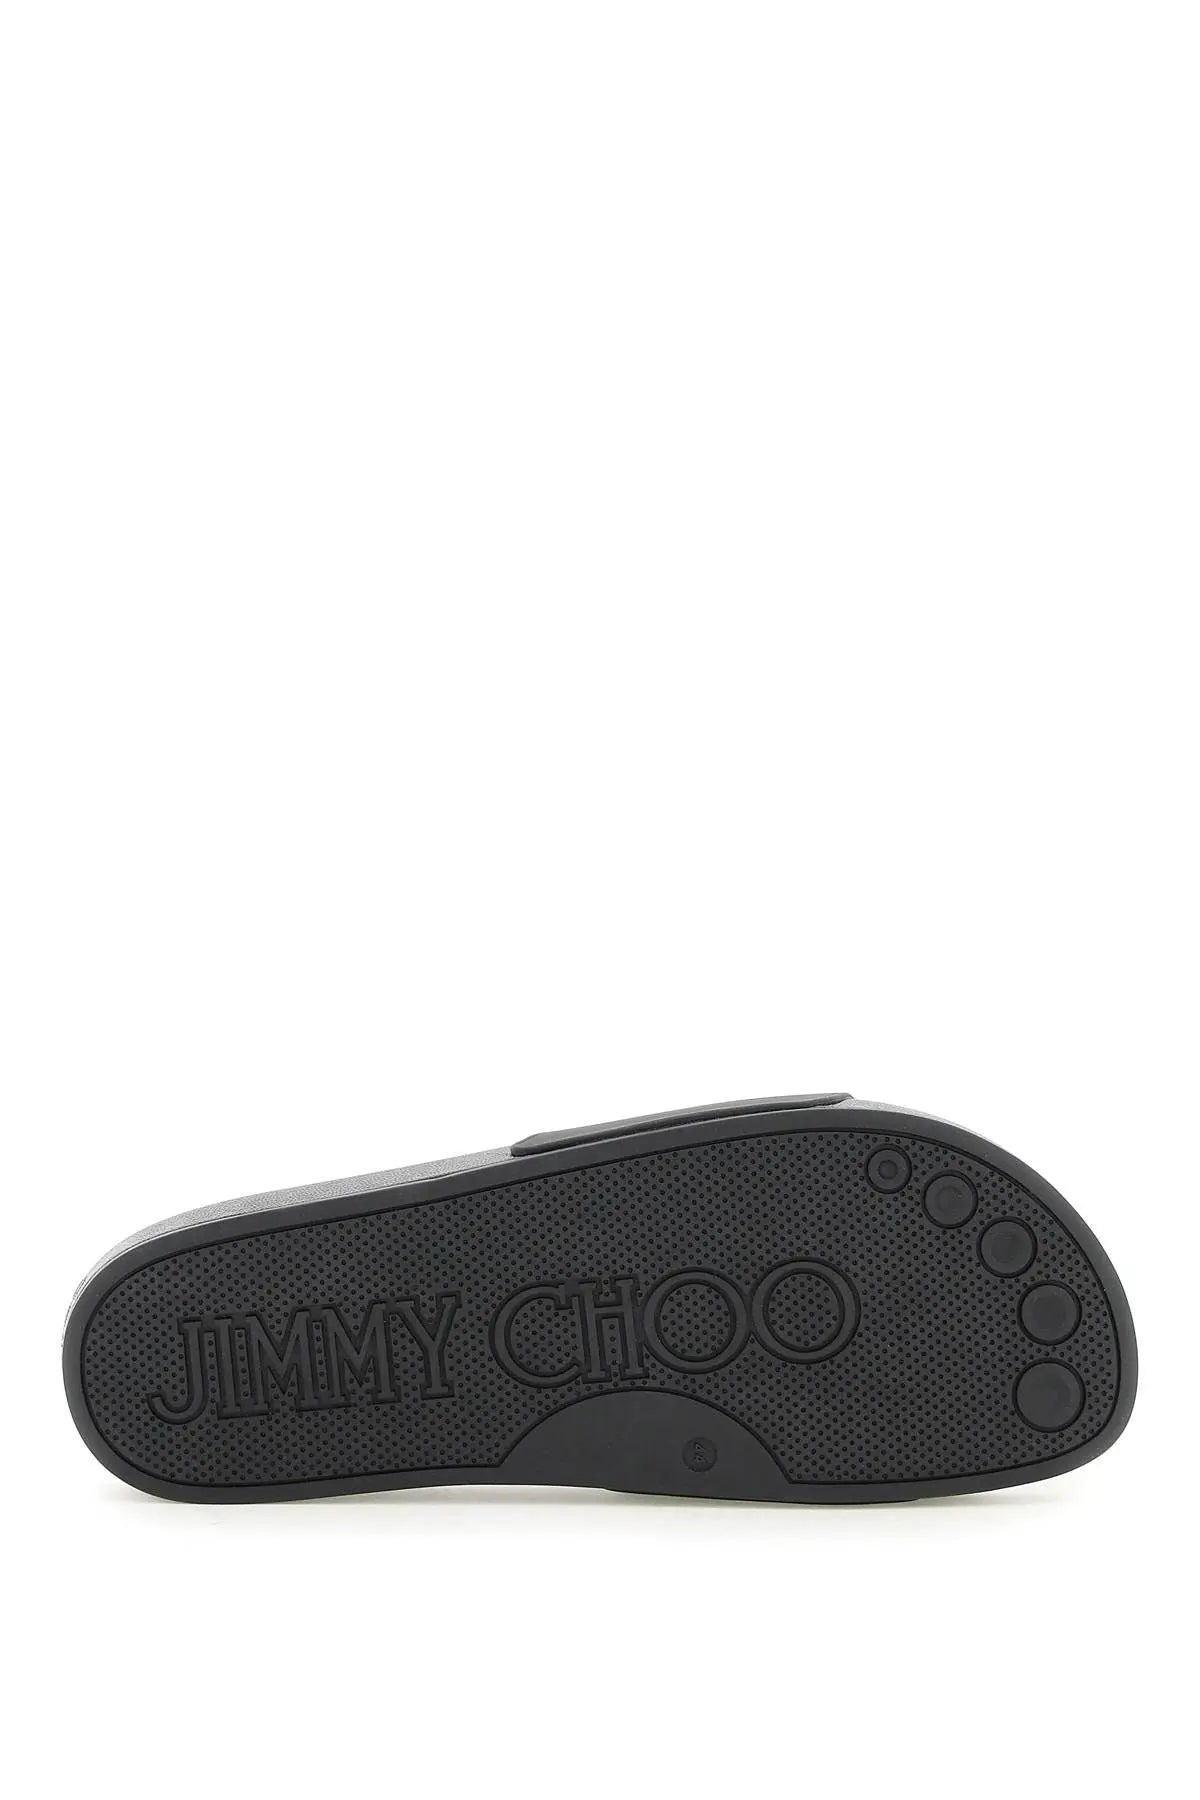 Jimmy Choo Black Port Rubber Slides